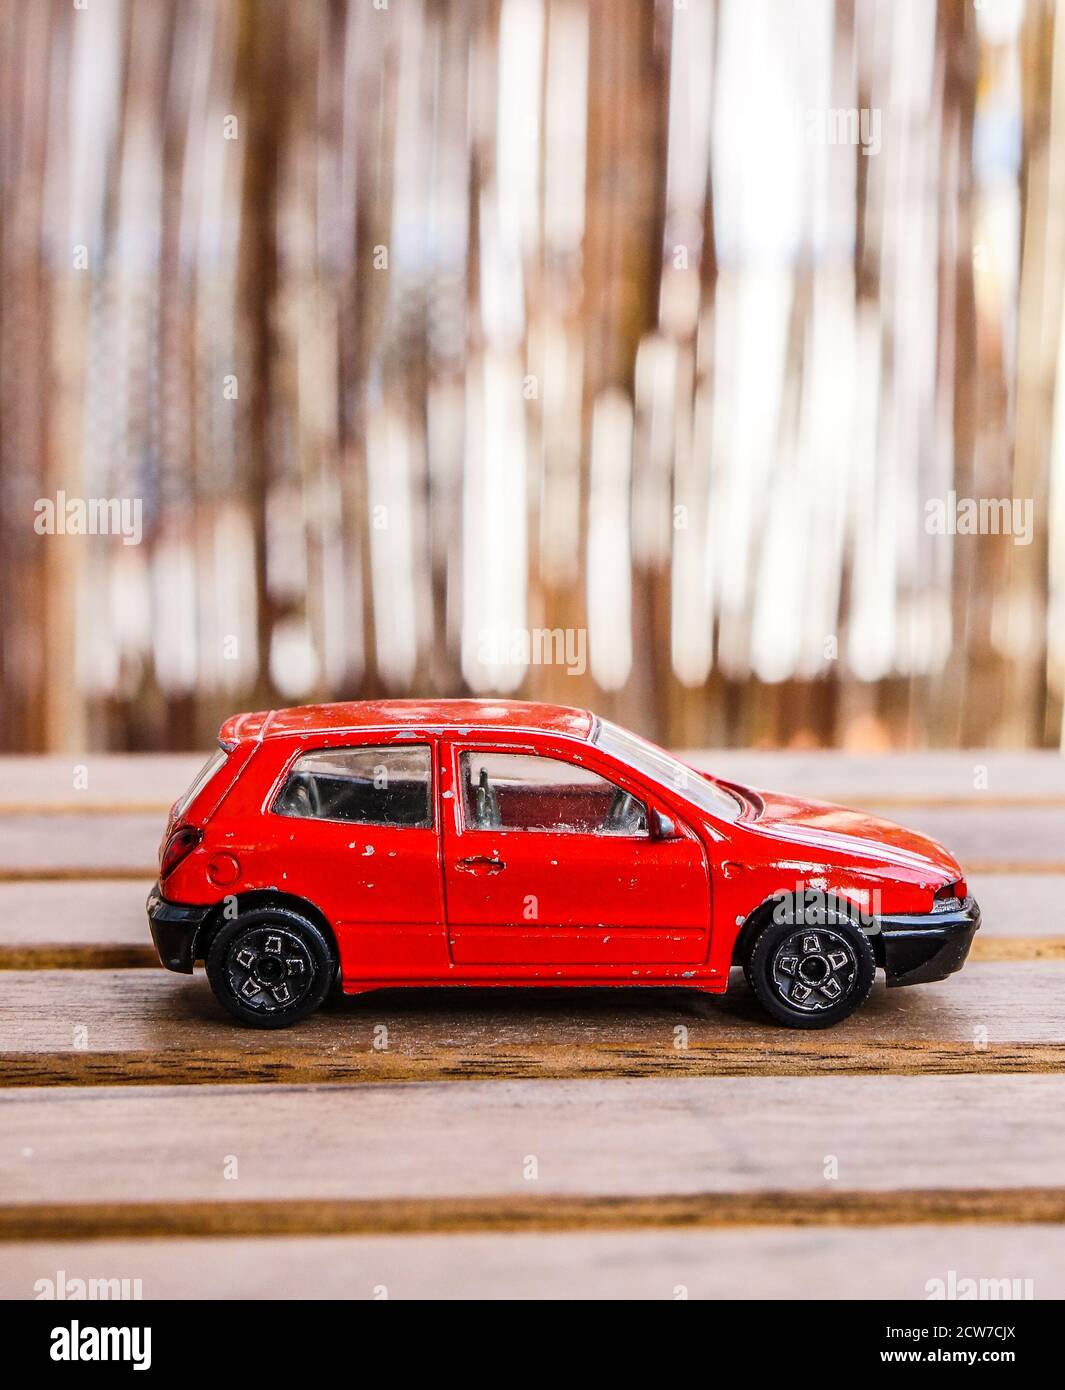 POZNAN, POLAND - Oct 26, 2016: Red Bburago Fiat Bravo toy car on a table Stock Photo